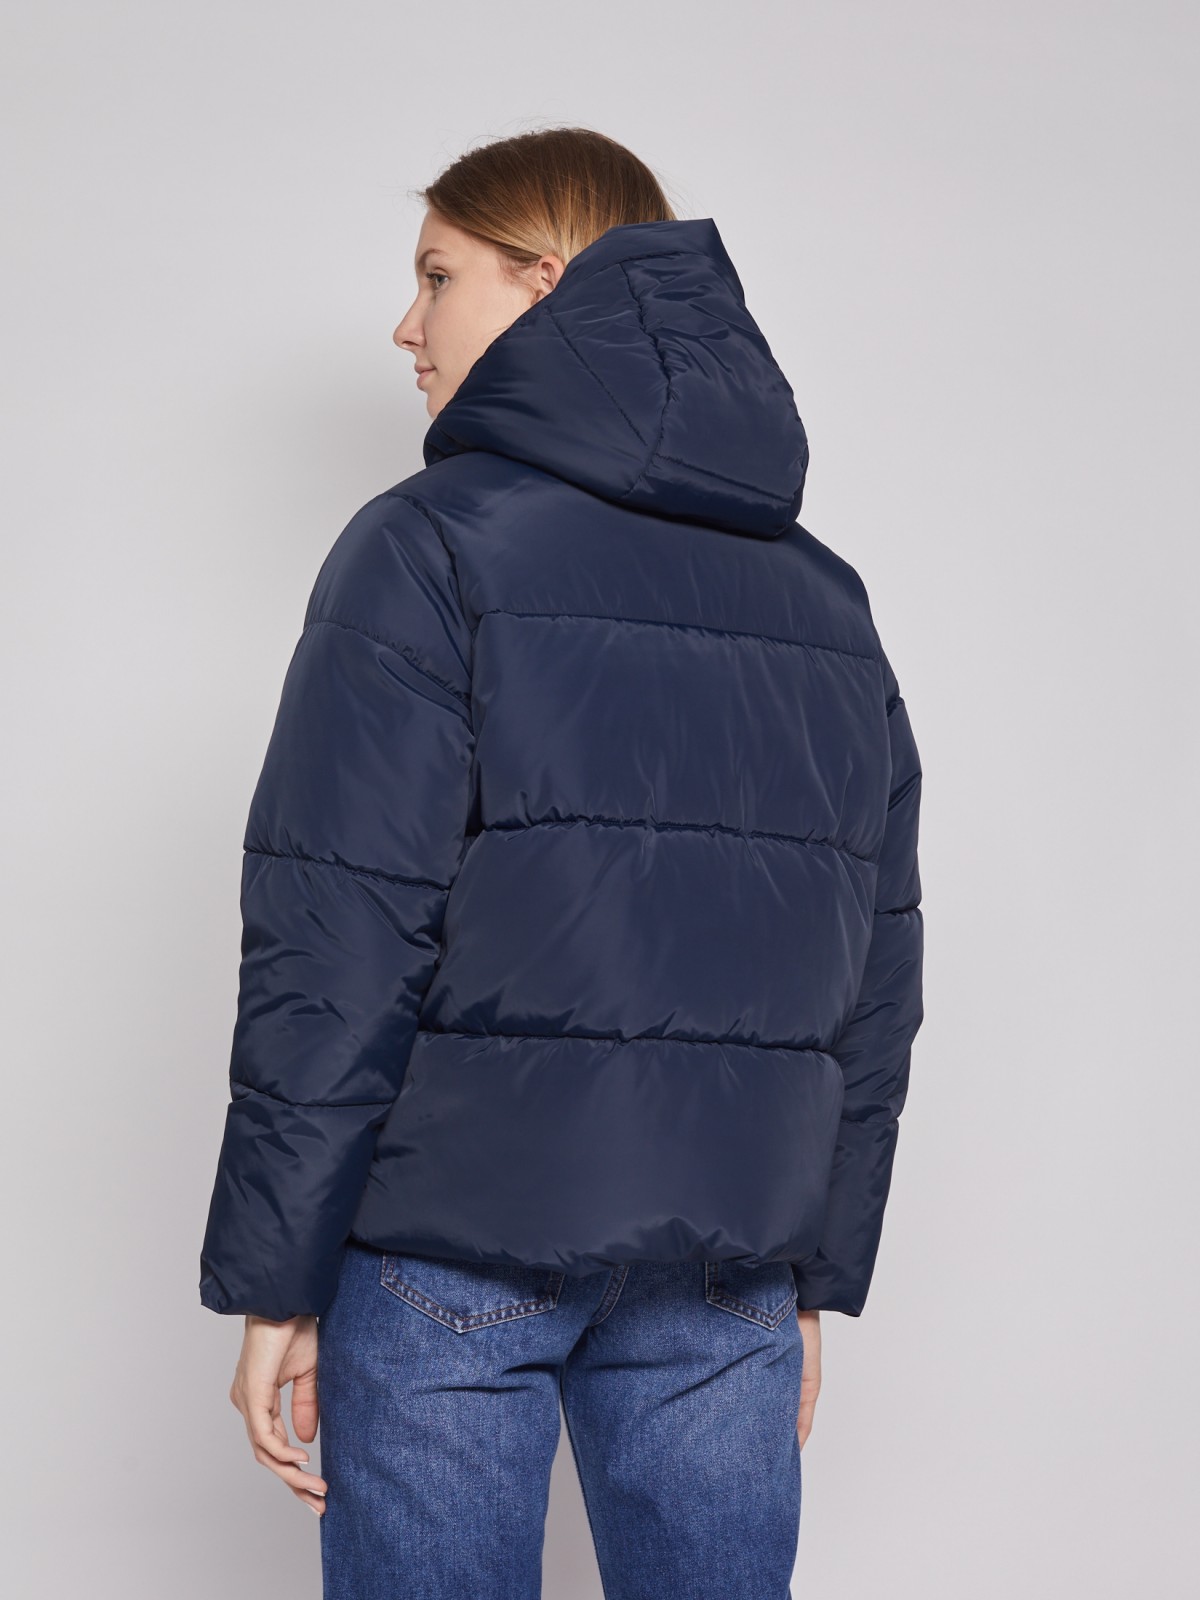 Утеплённая дутая куртка zolla 022125112134, цвет синий, размер XS - фото 5